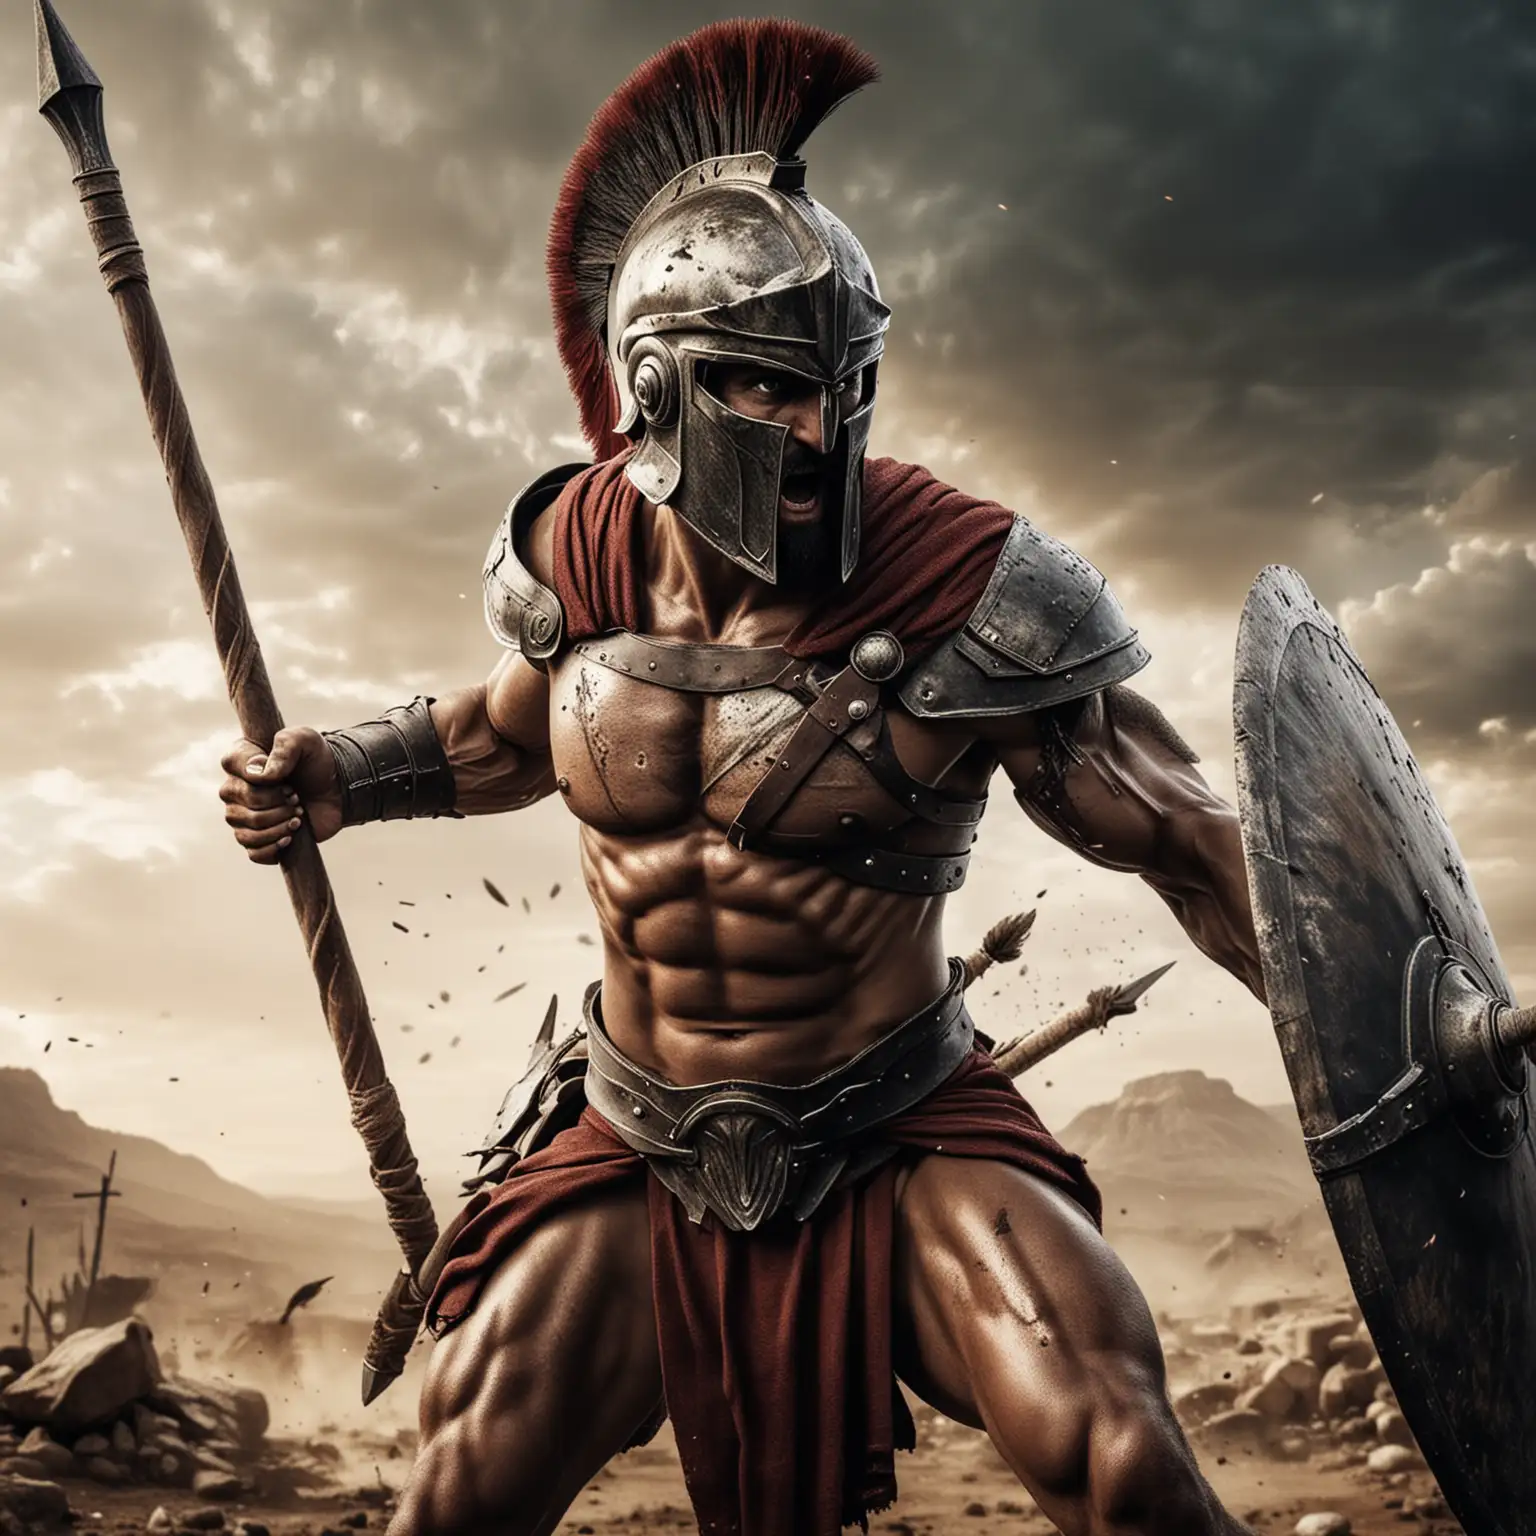 Spartan with a fierce battle face holding a spear